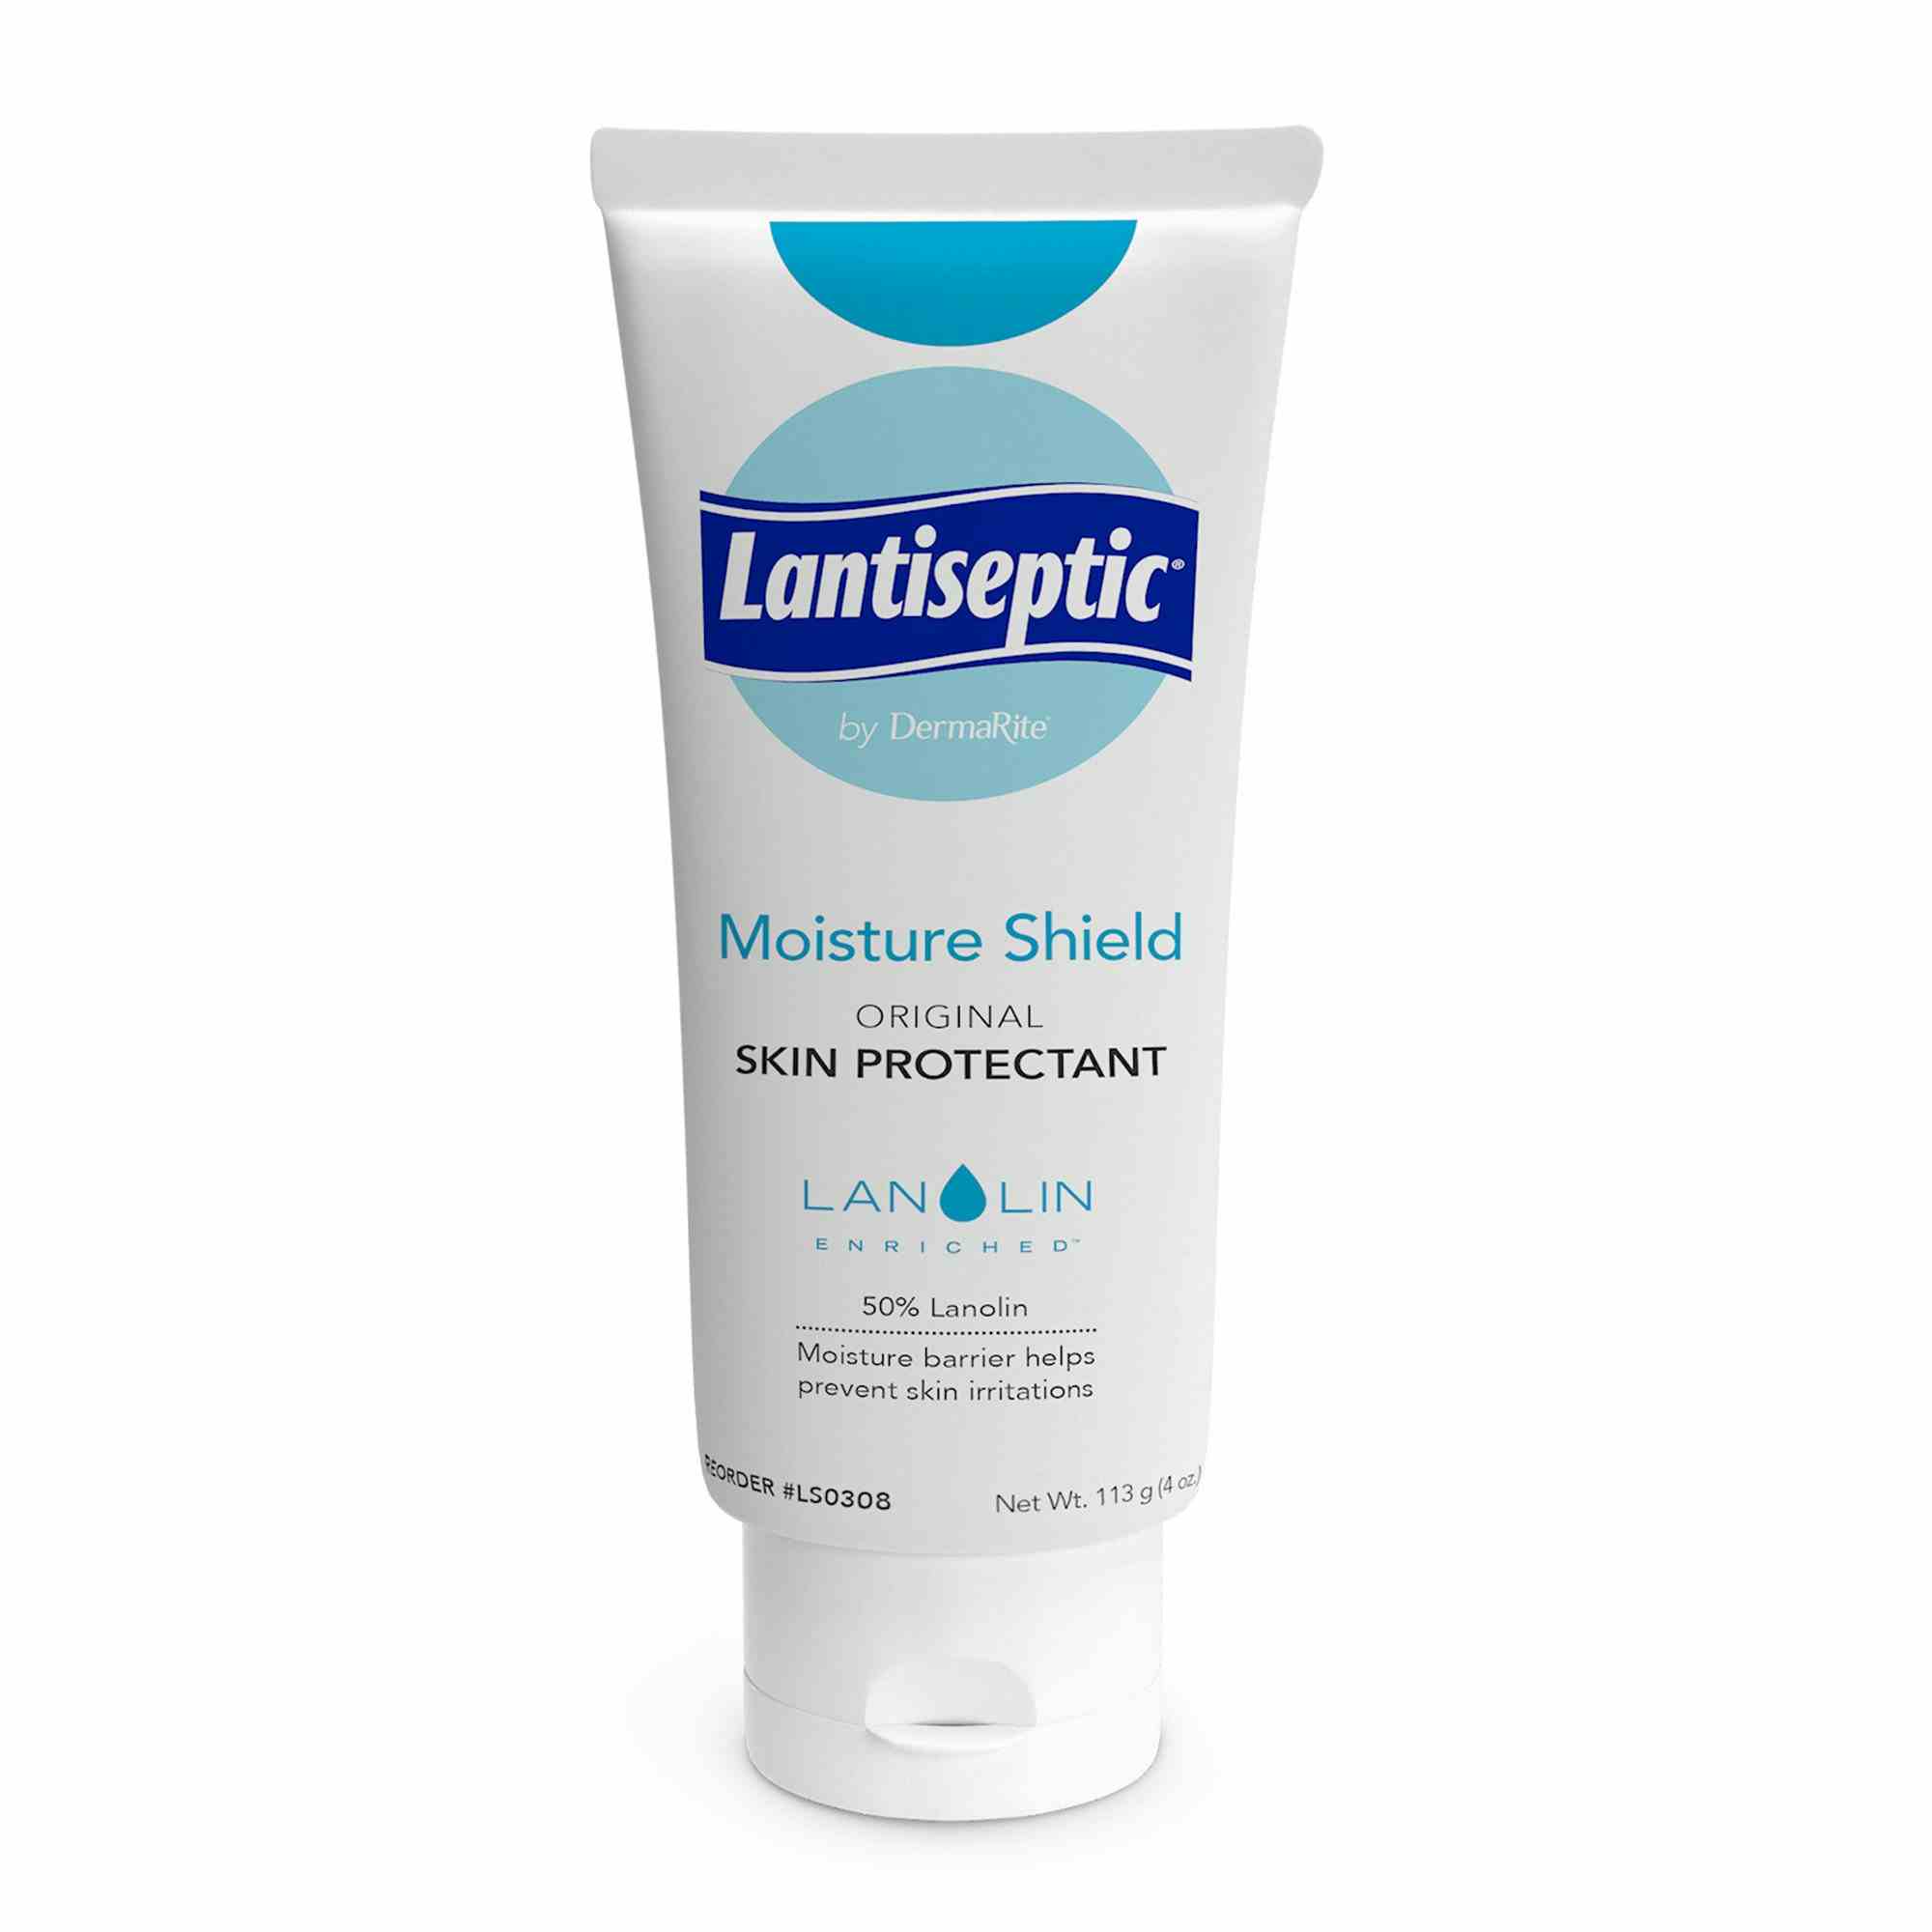 Lantiseptic Moisture Shield Skin Protectant, Tube, Scented, 4 oz., LS0308, Case of 12 Tubes